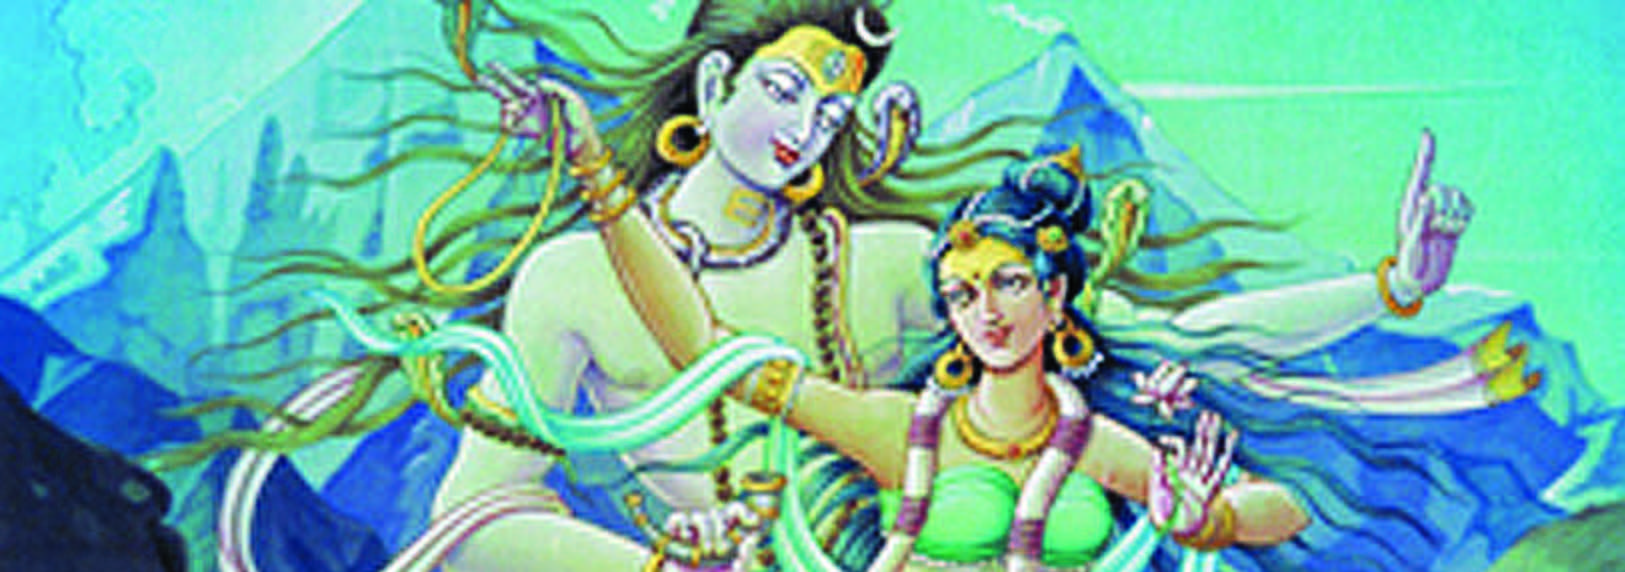 Shiva & Shakti are one